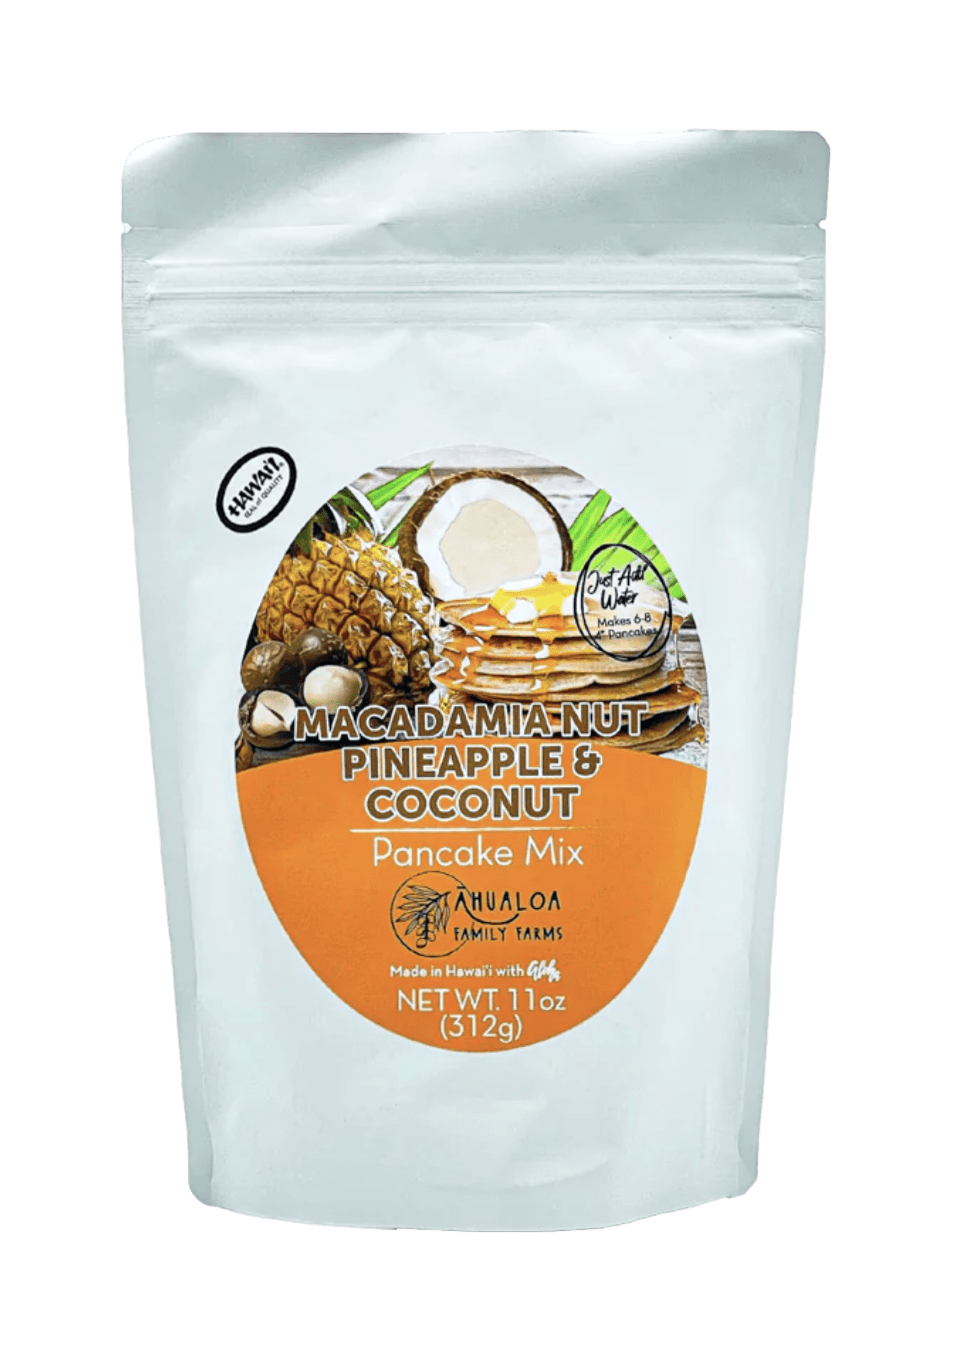 Macadamia Nut Pineapple & Coconut Pancake Mix 11oz - Hawaiian Farmers Market